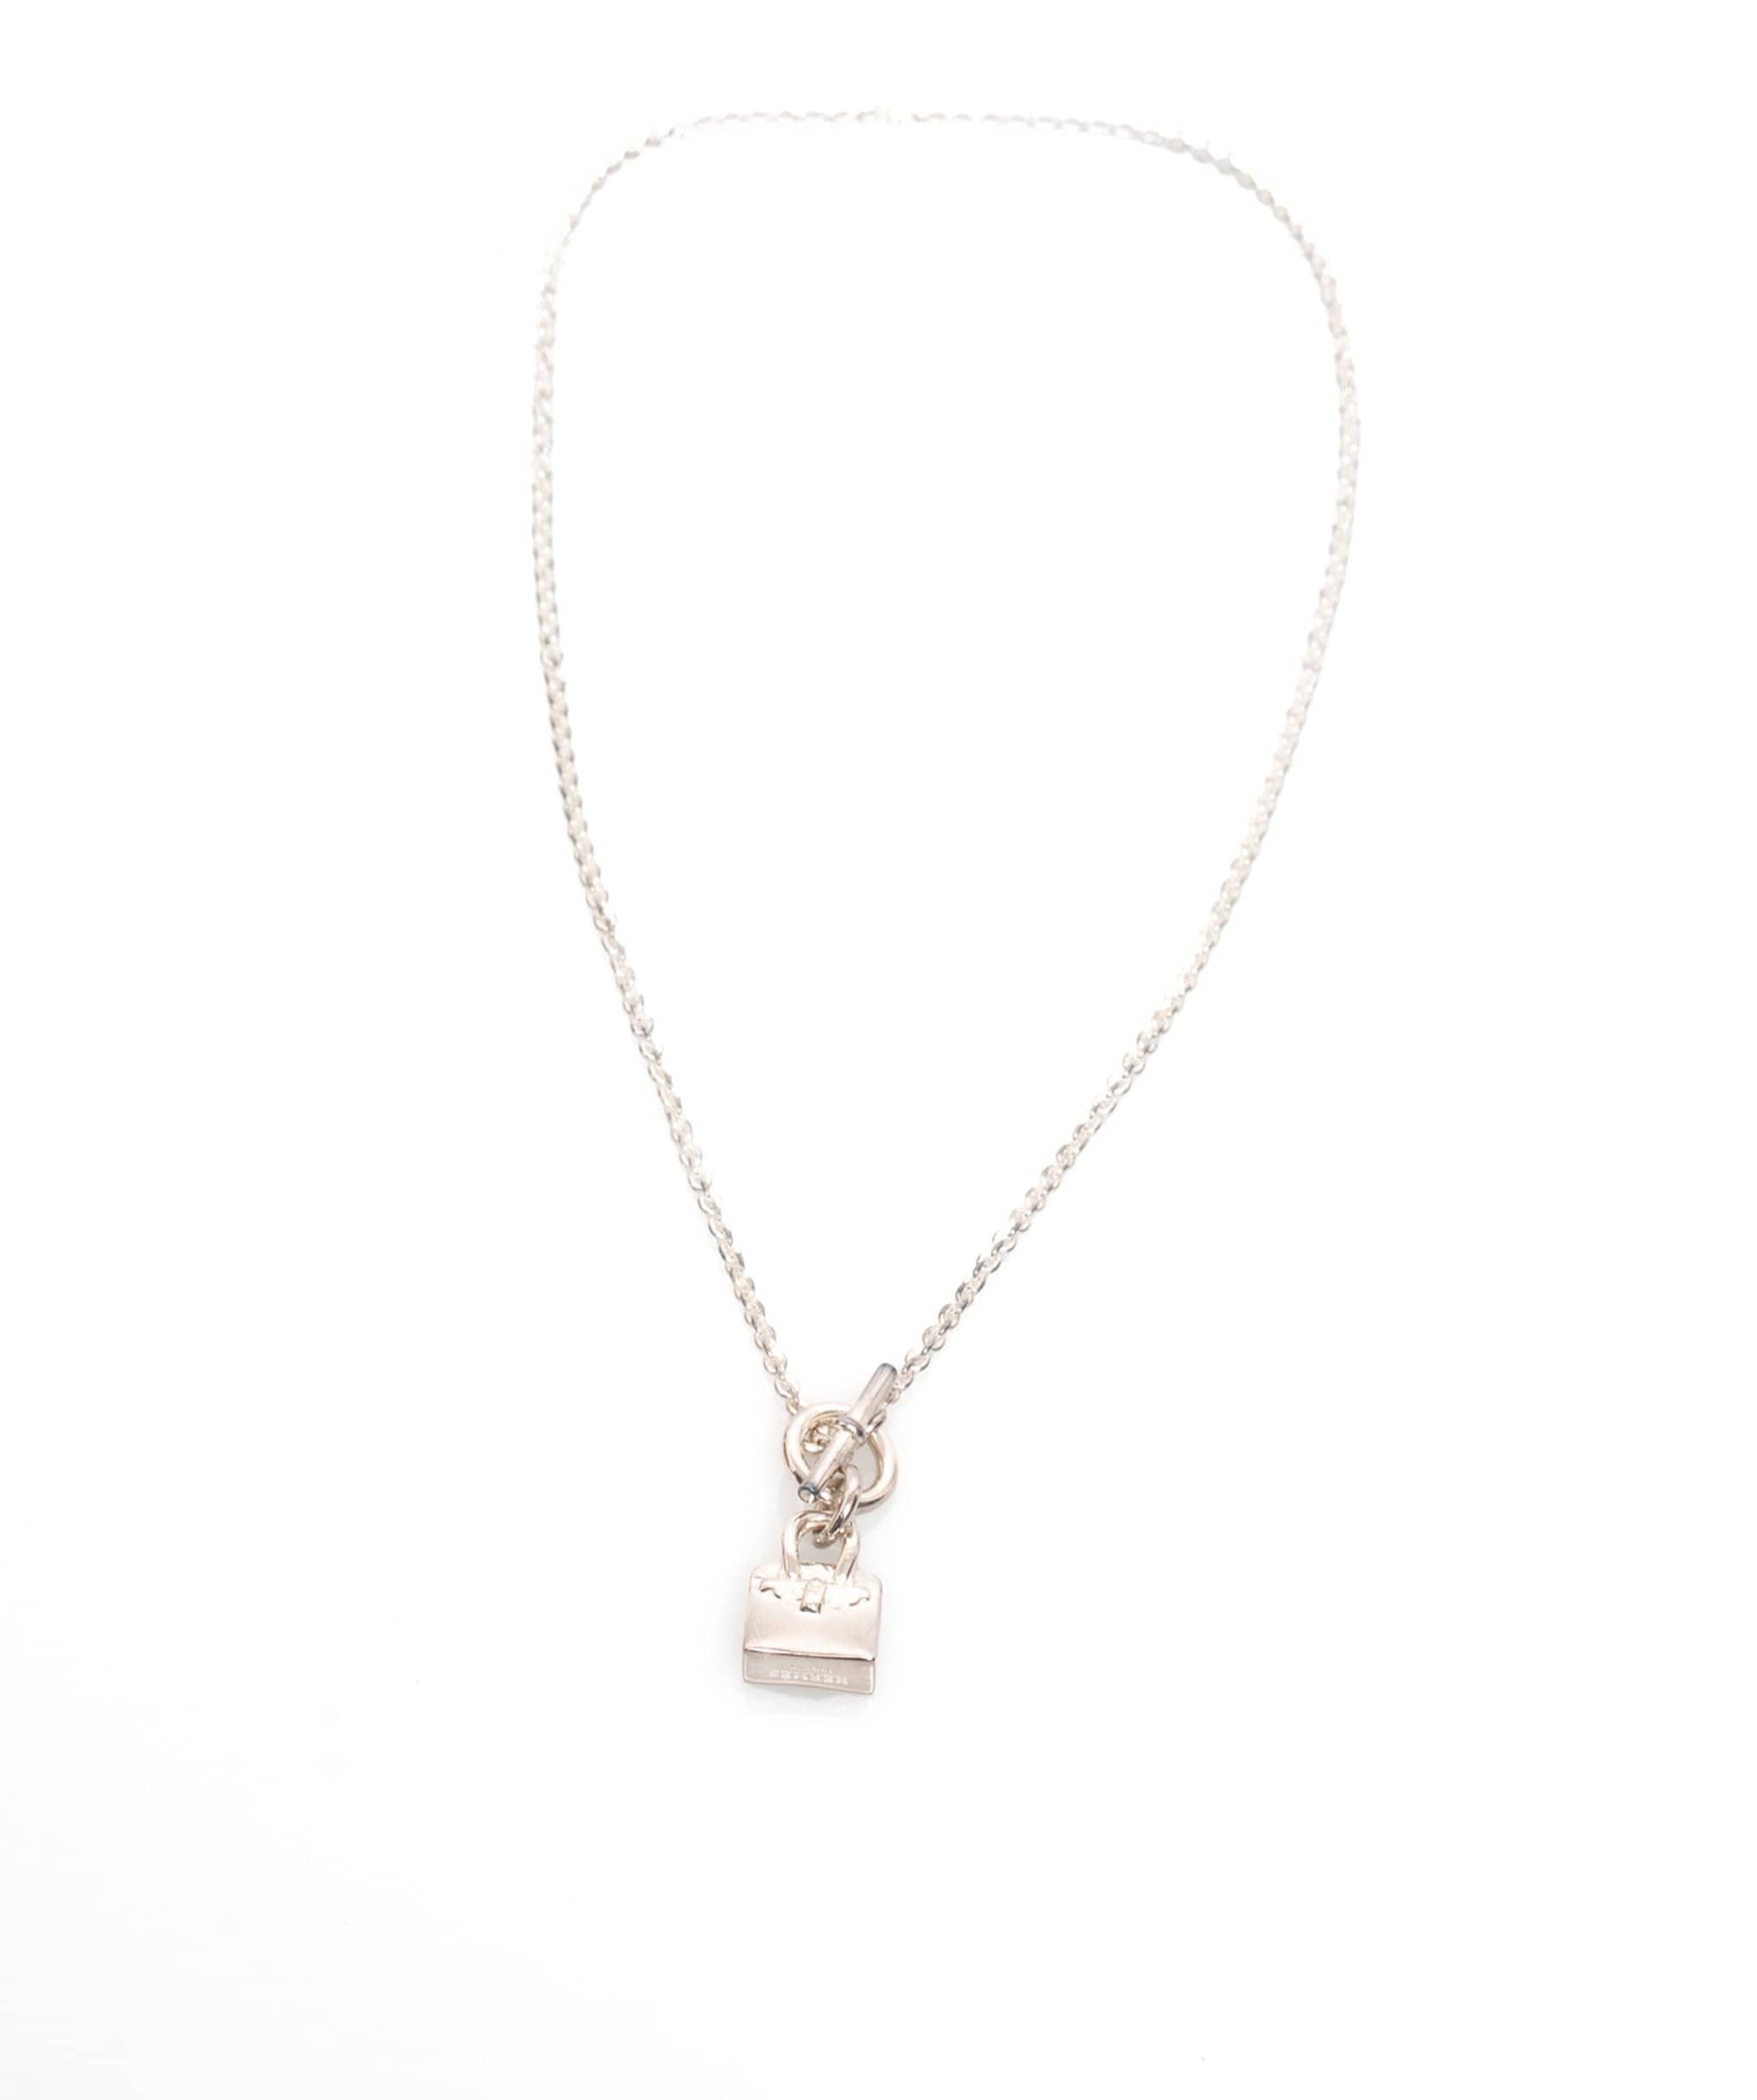 Hermès Hermes Birkin Pendant Sterling Silver Necklace CW1166